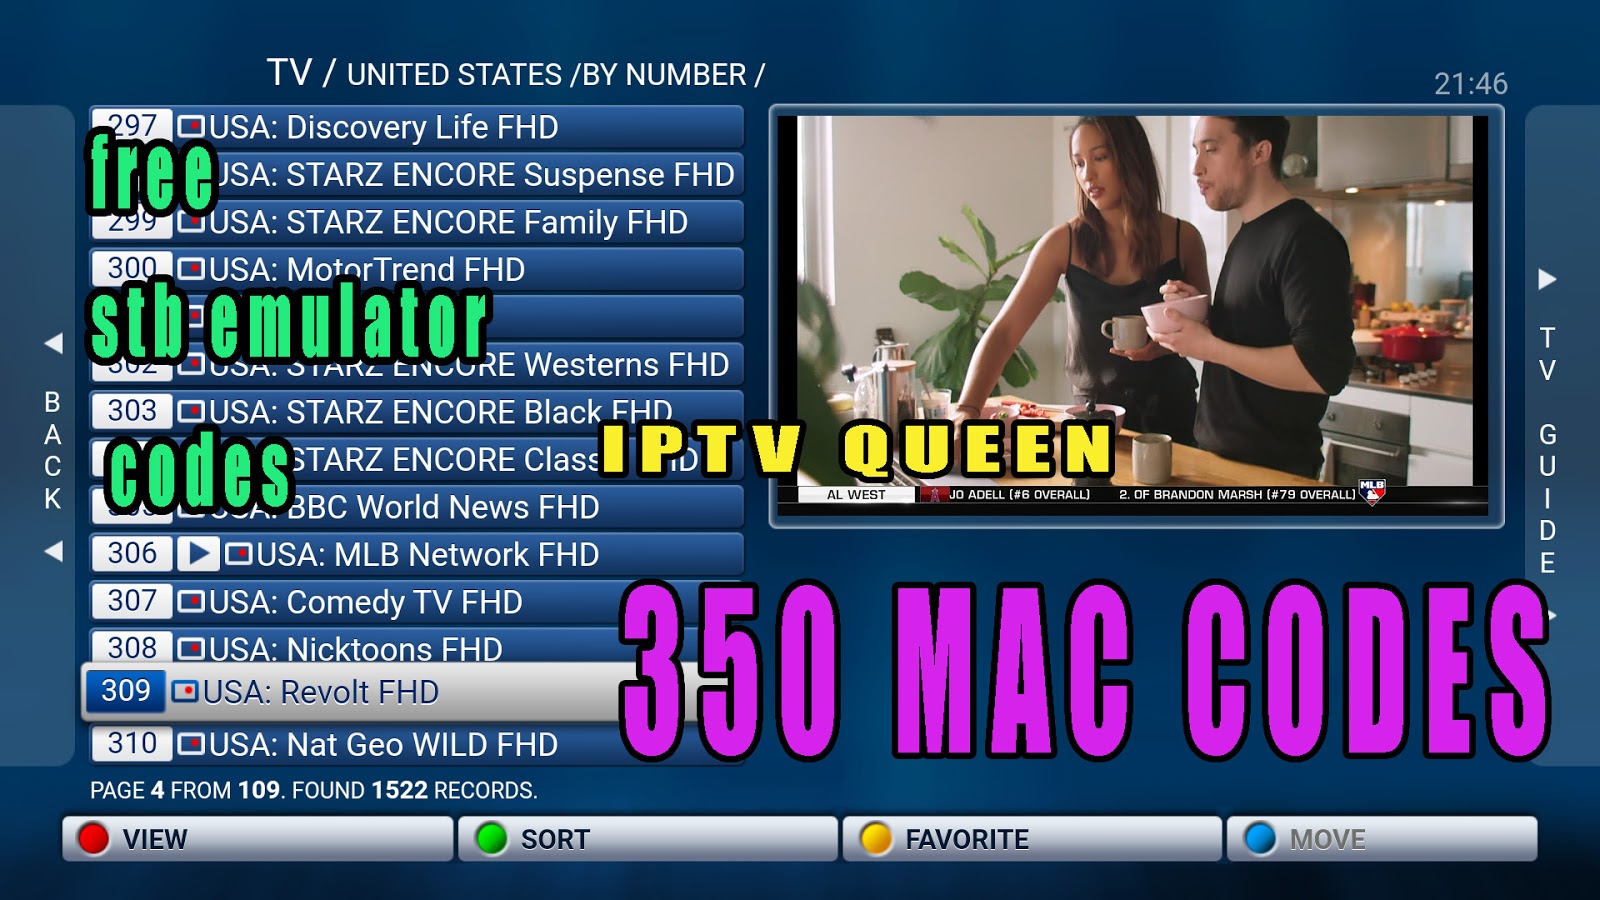 stb emulator pro for mac